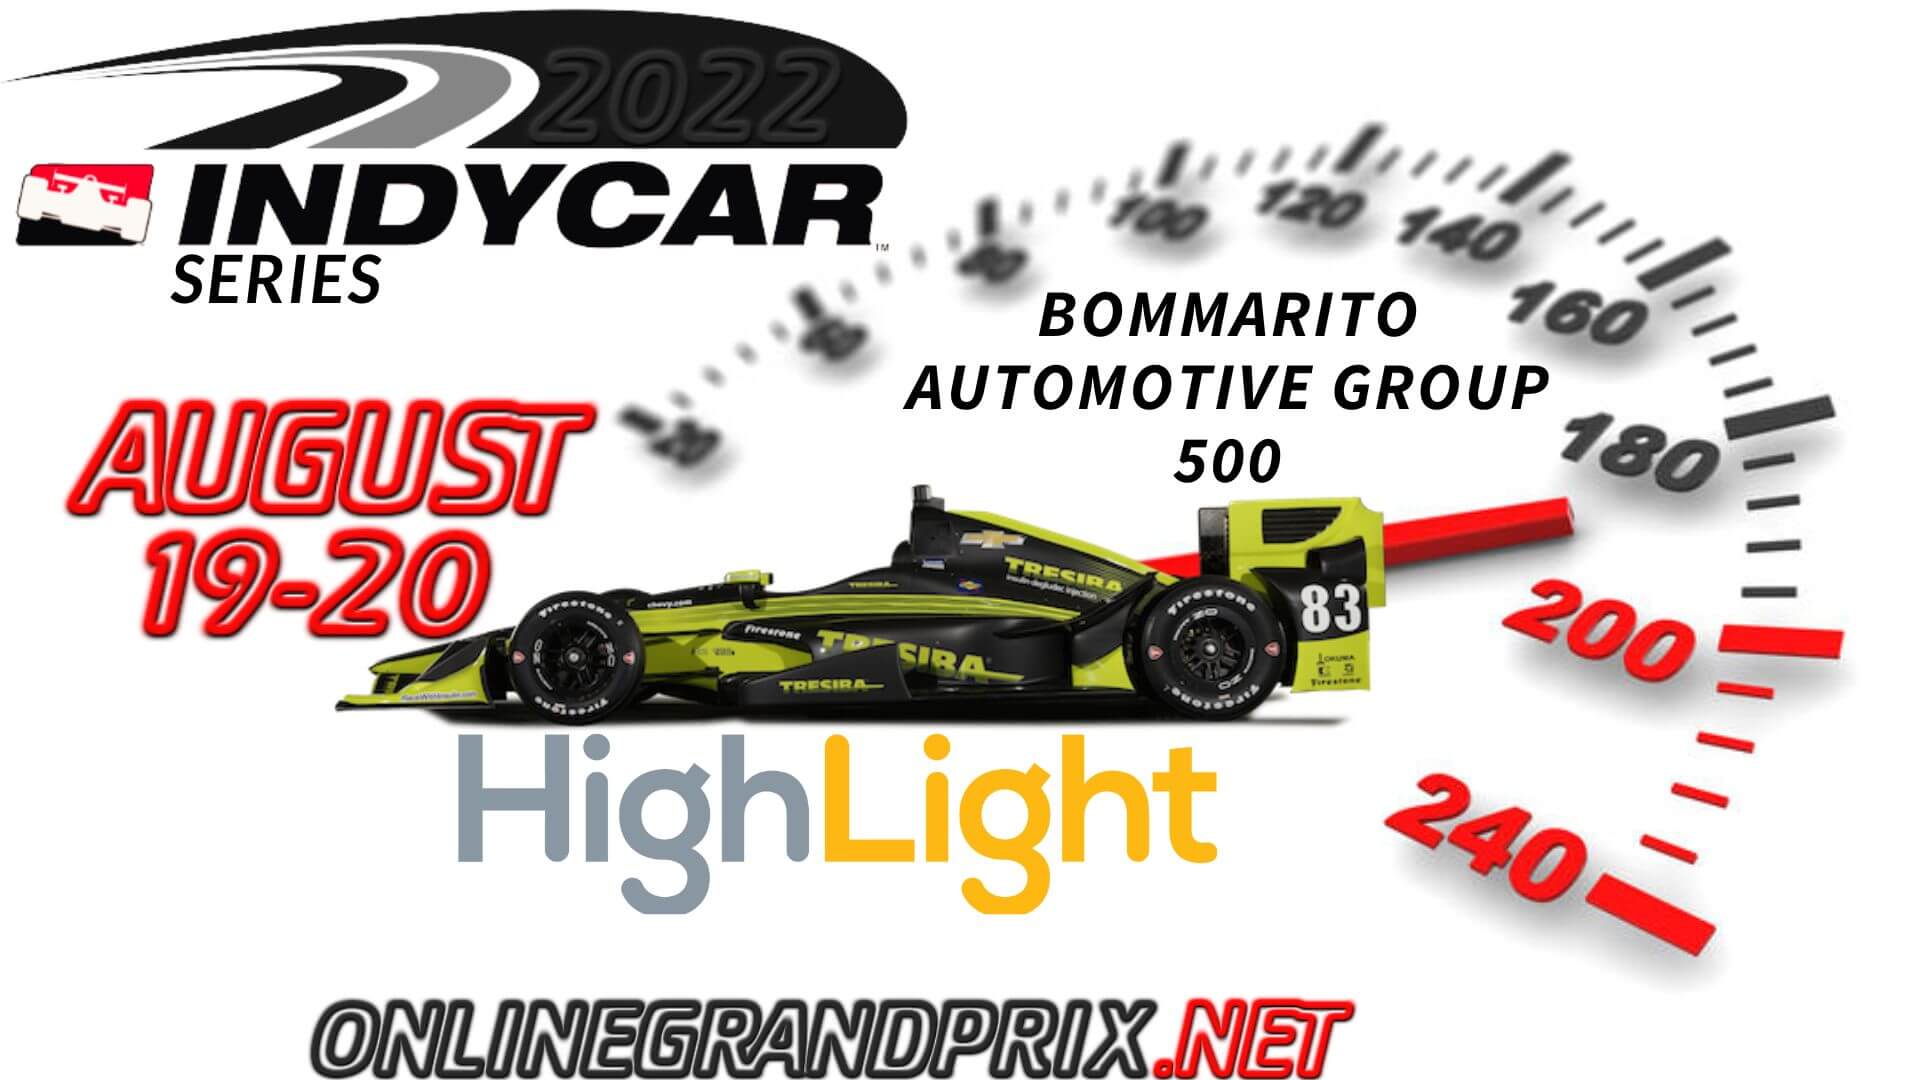 Bommarito Automotive Group 500 Highlights INDYCAR 2022